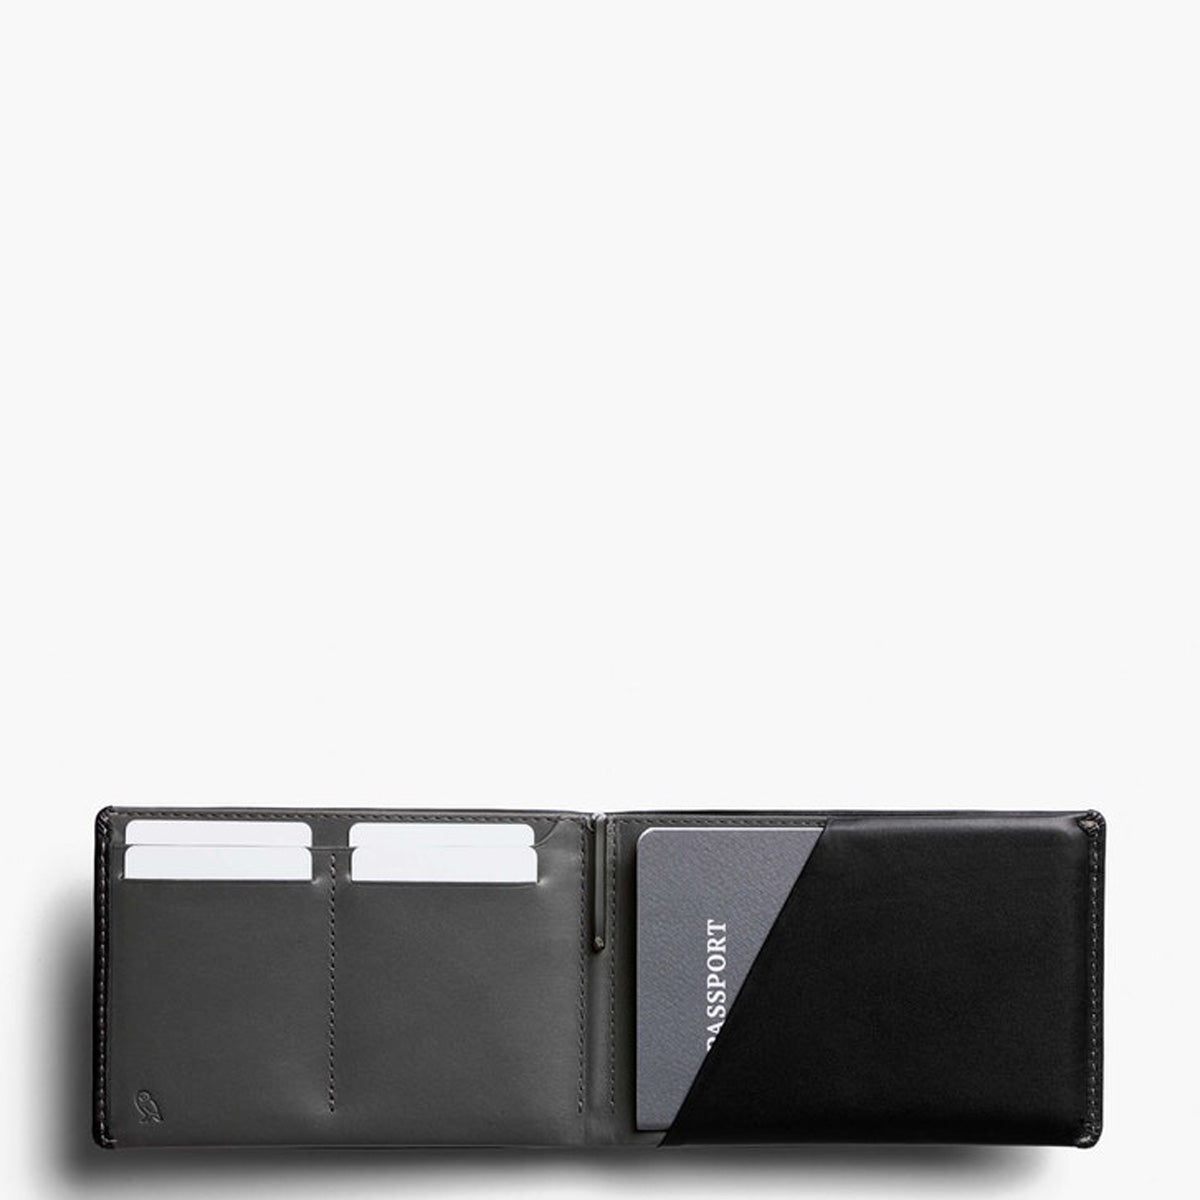 Bellroy Travel Wallet - Black